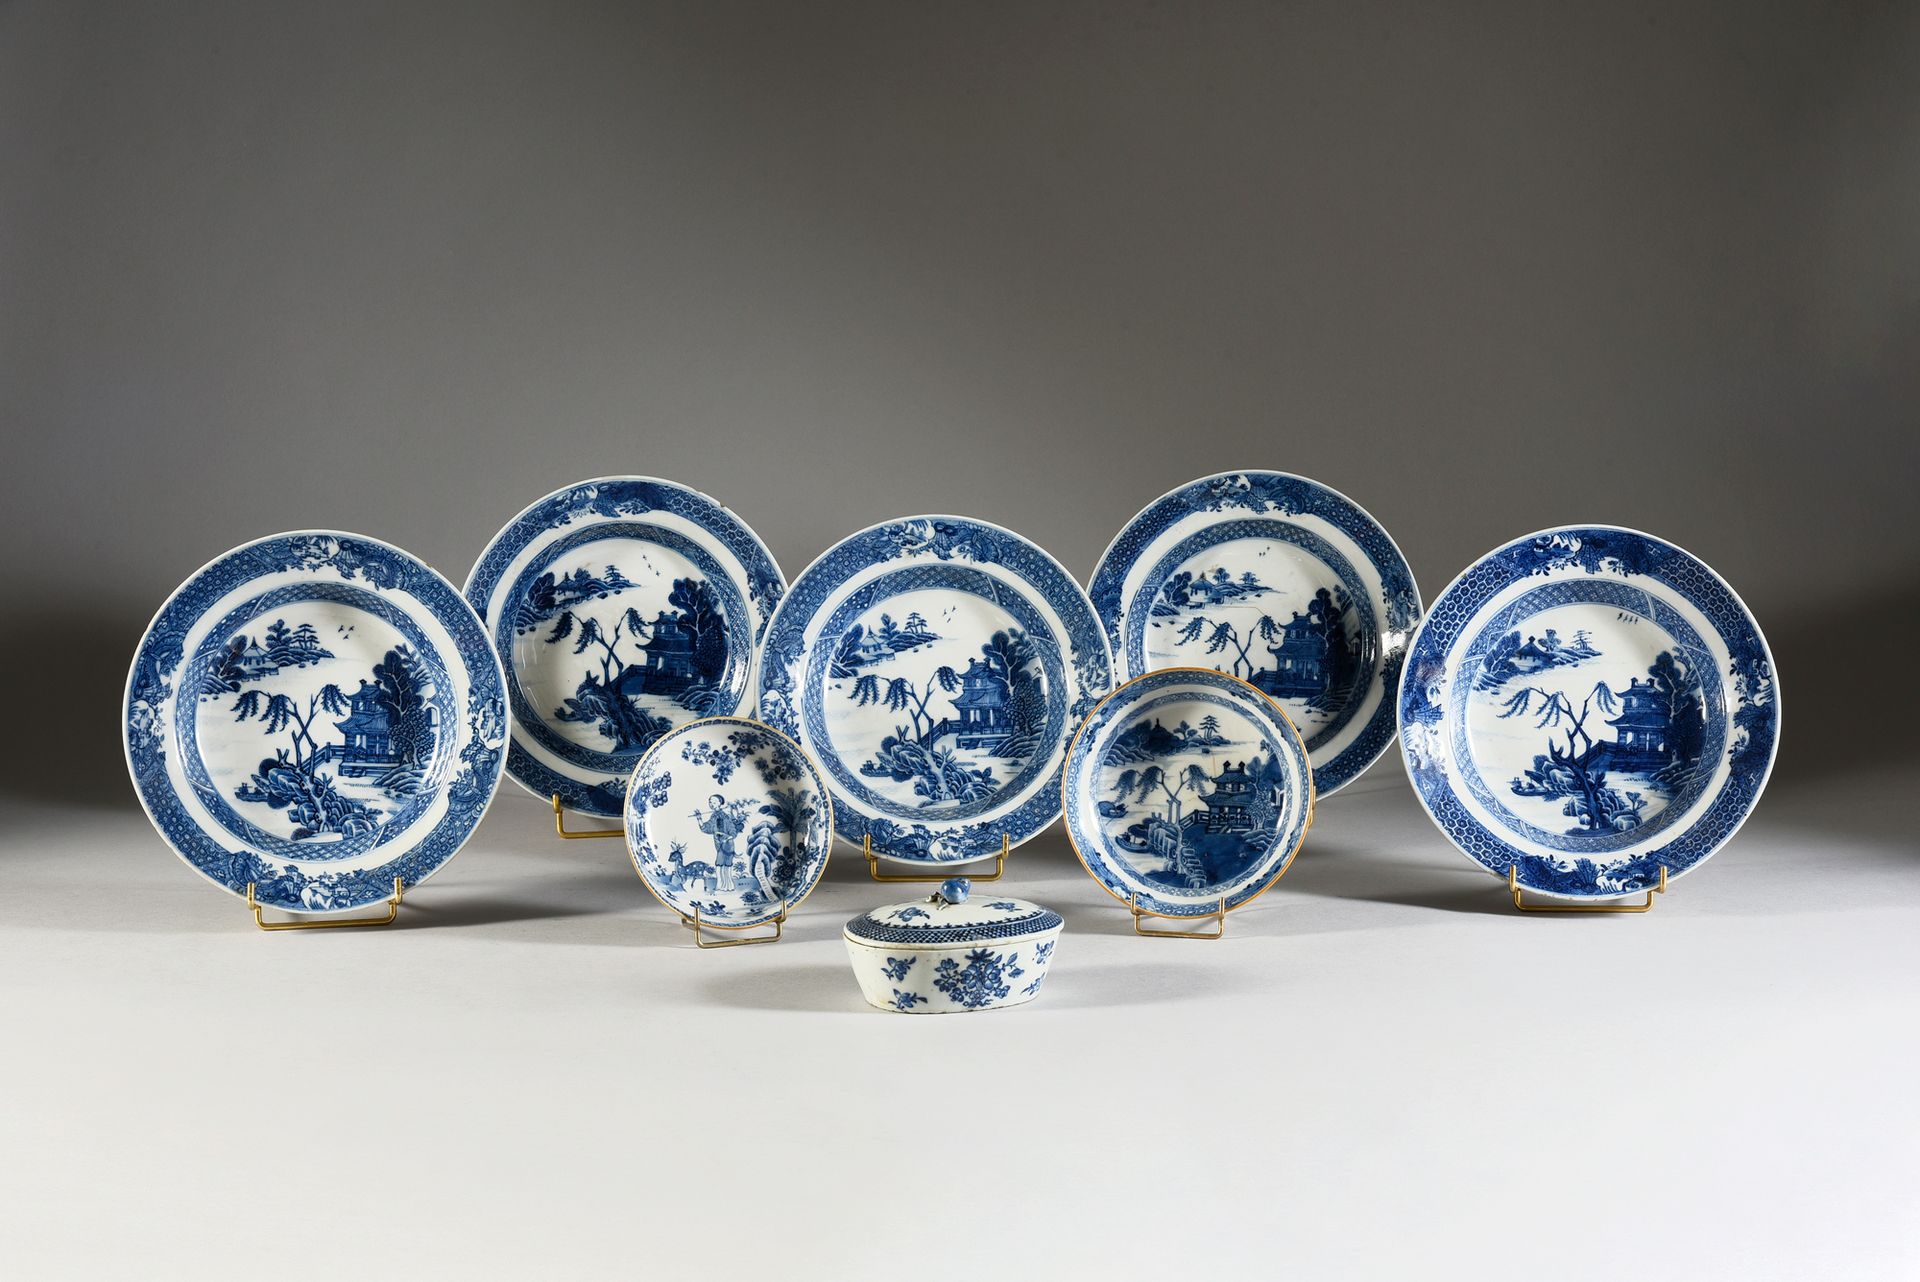 COMPAGNIE DES INDES 
一套由五个汤盘、两个盘子和一个有盖的小陶罐组成的瓷器，上面有白色和蓝色的湖景装饰（feles）。
中国嘉庆年间约180&hellip;